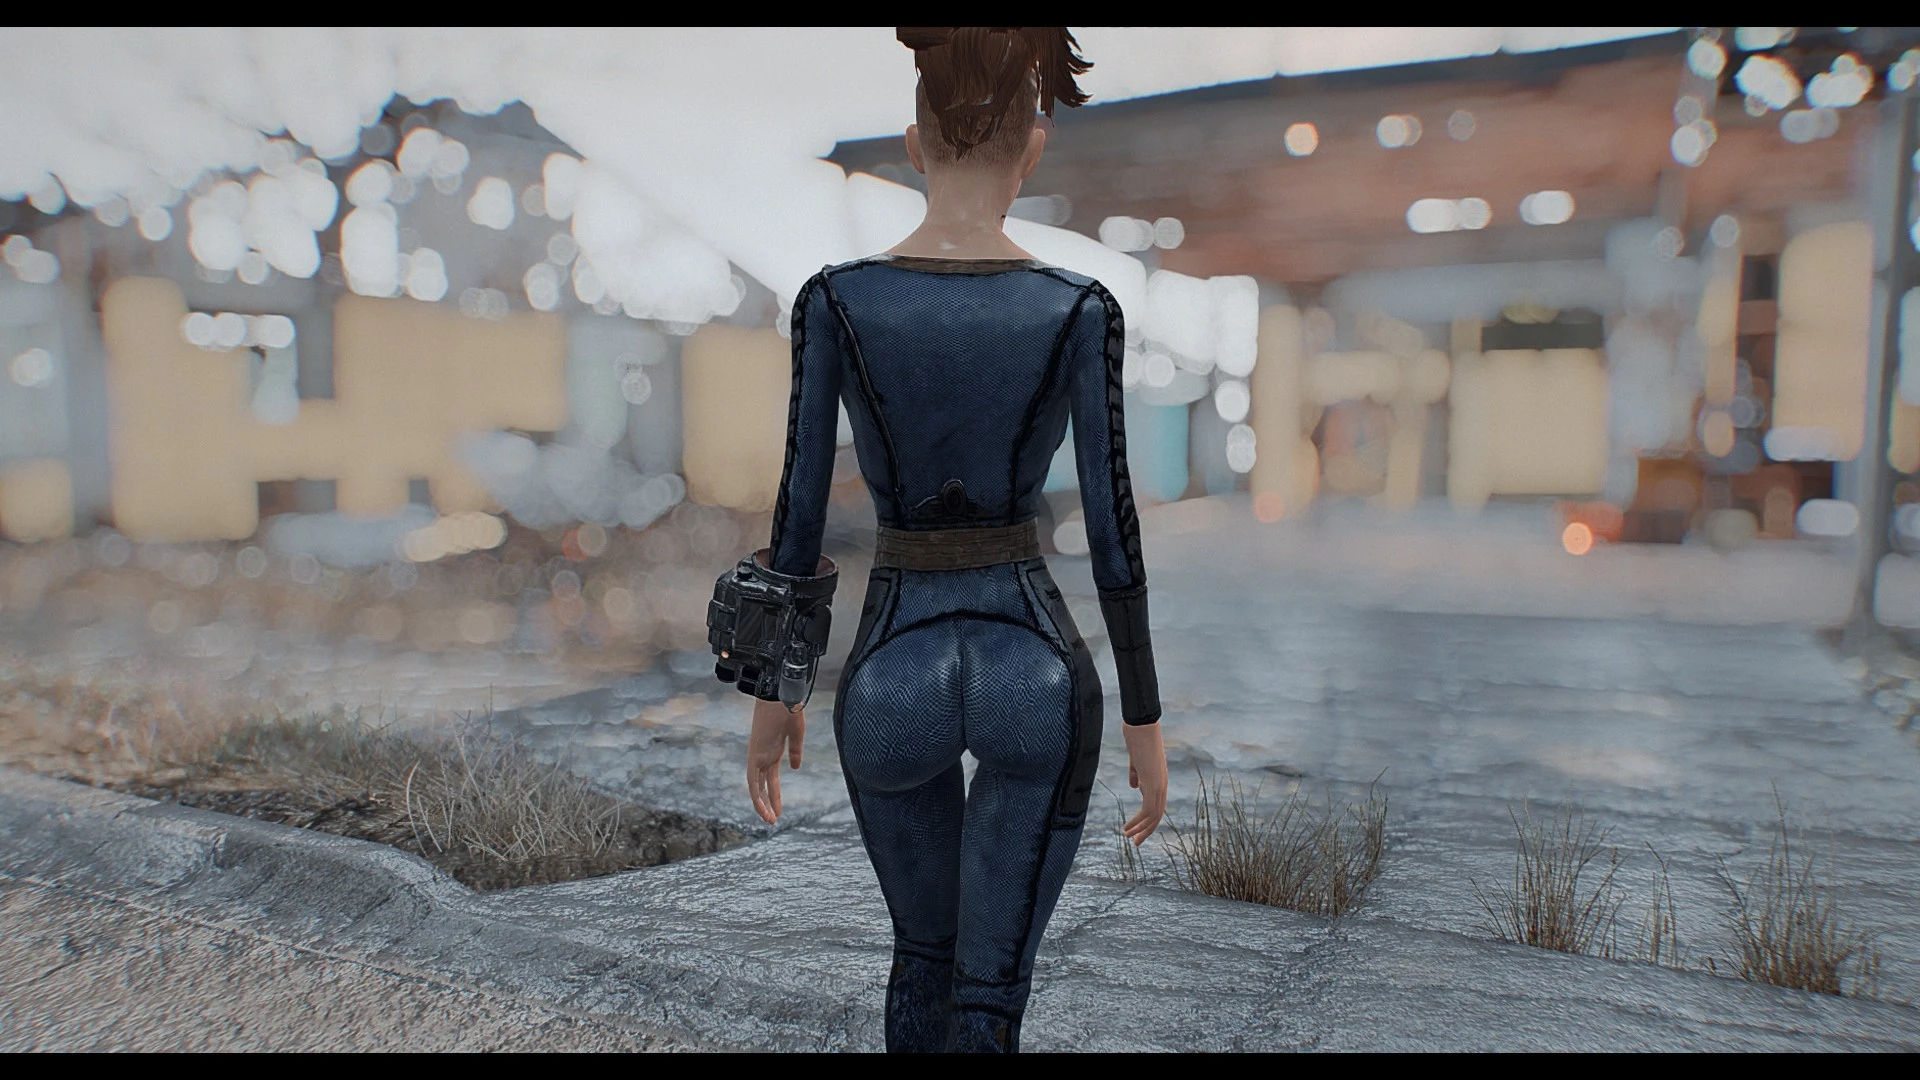 Proto Vault Suit At Fallout 4 Nexus Mods And Community